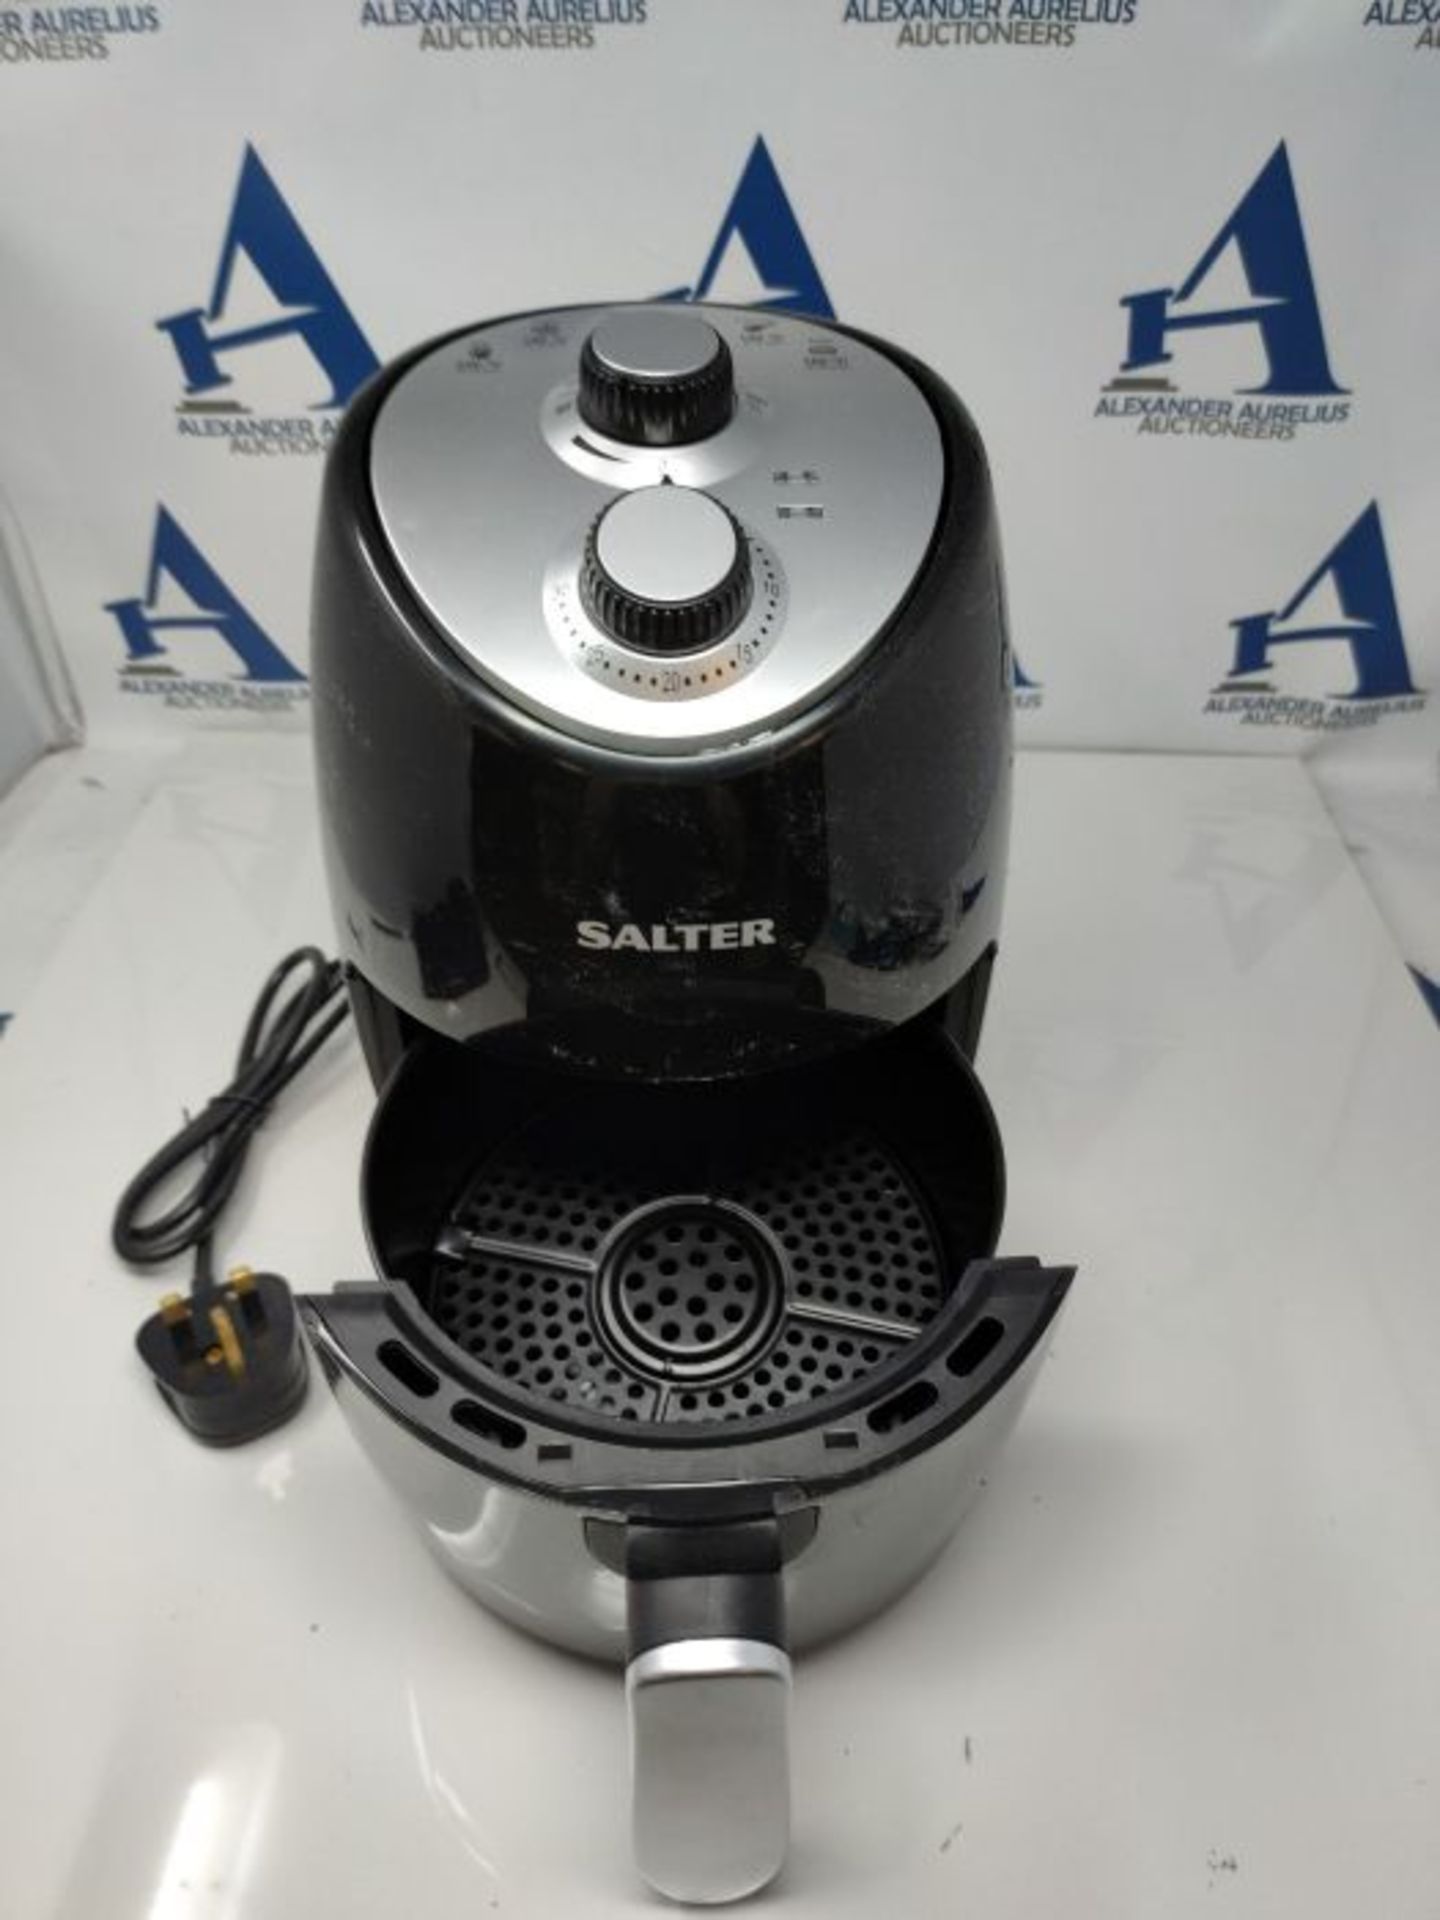 Salter EK2817 Compact 2L Hot Air Fryer, 1000W Fryer, Removable Frying Rack & 30 Minute - Image 3 of 3